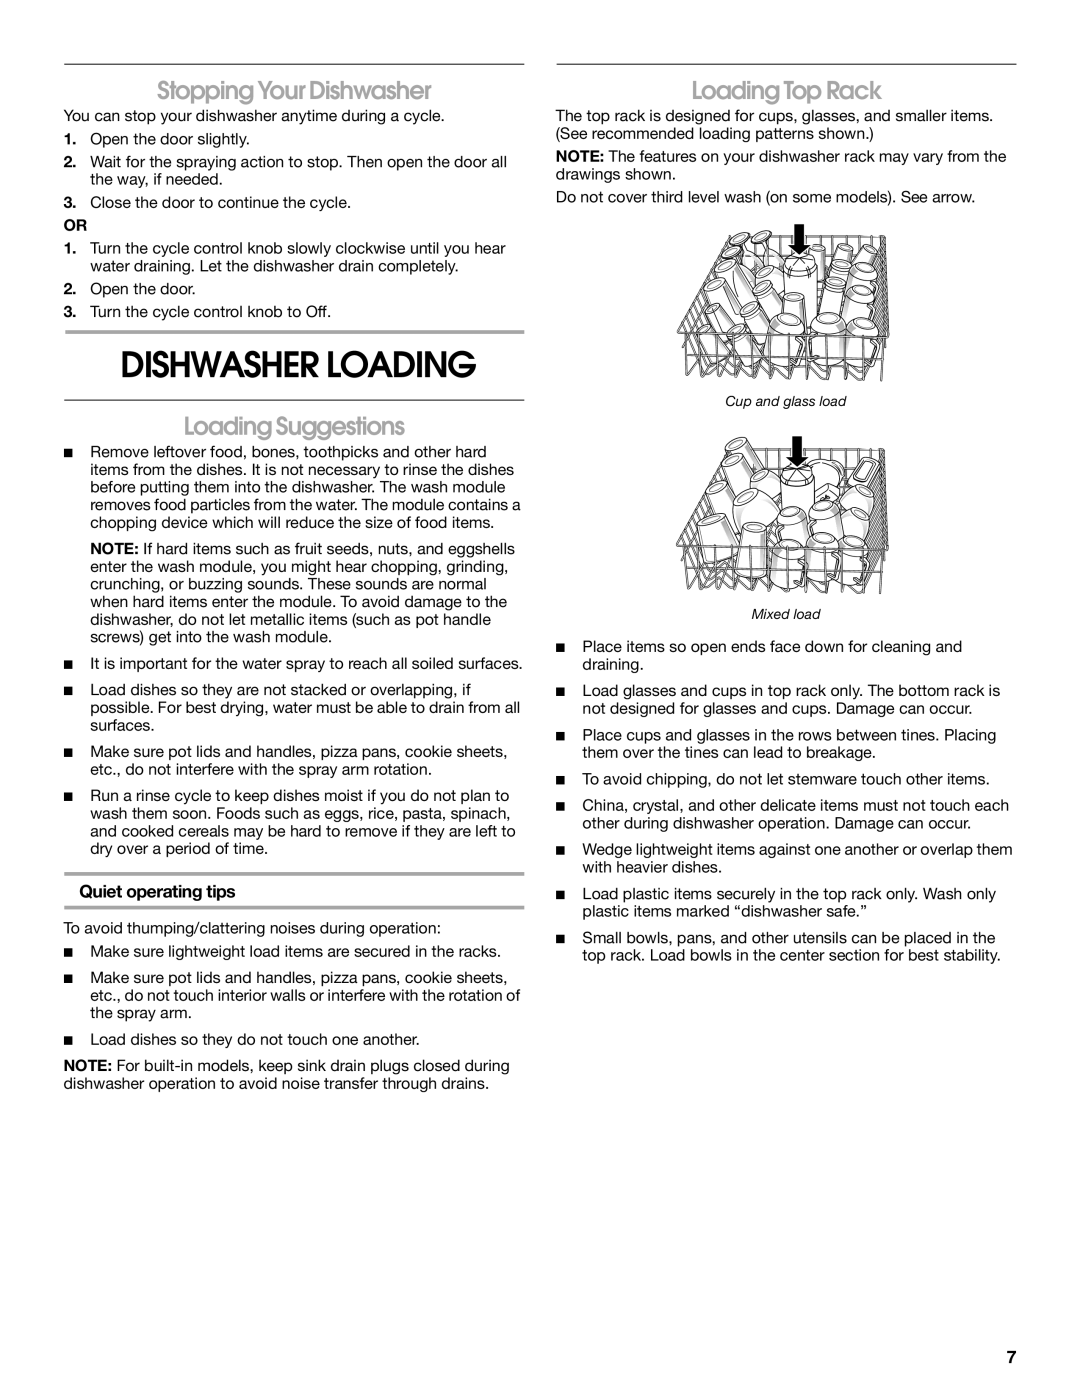 IKEA IUD6000S Dishwasher Loading, Stopping Your Dishwasher, Loading Suggestions, Loading Top Rack, Quiet operating tips 